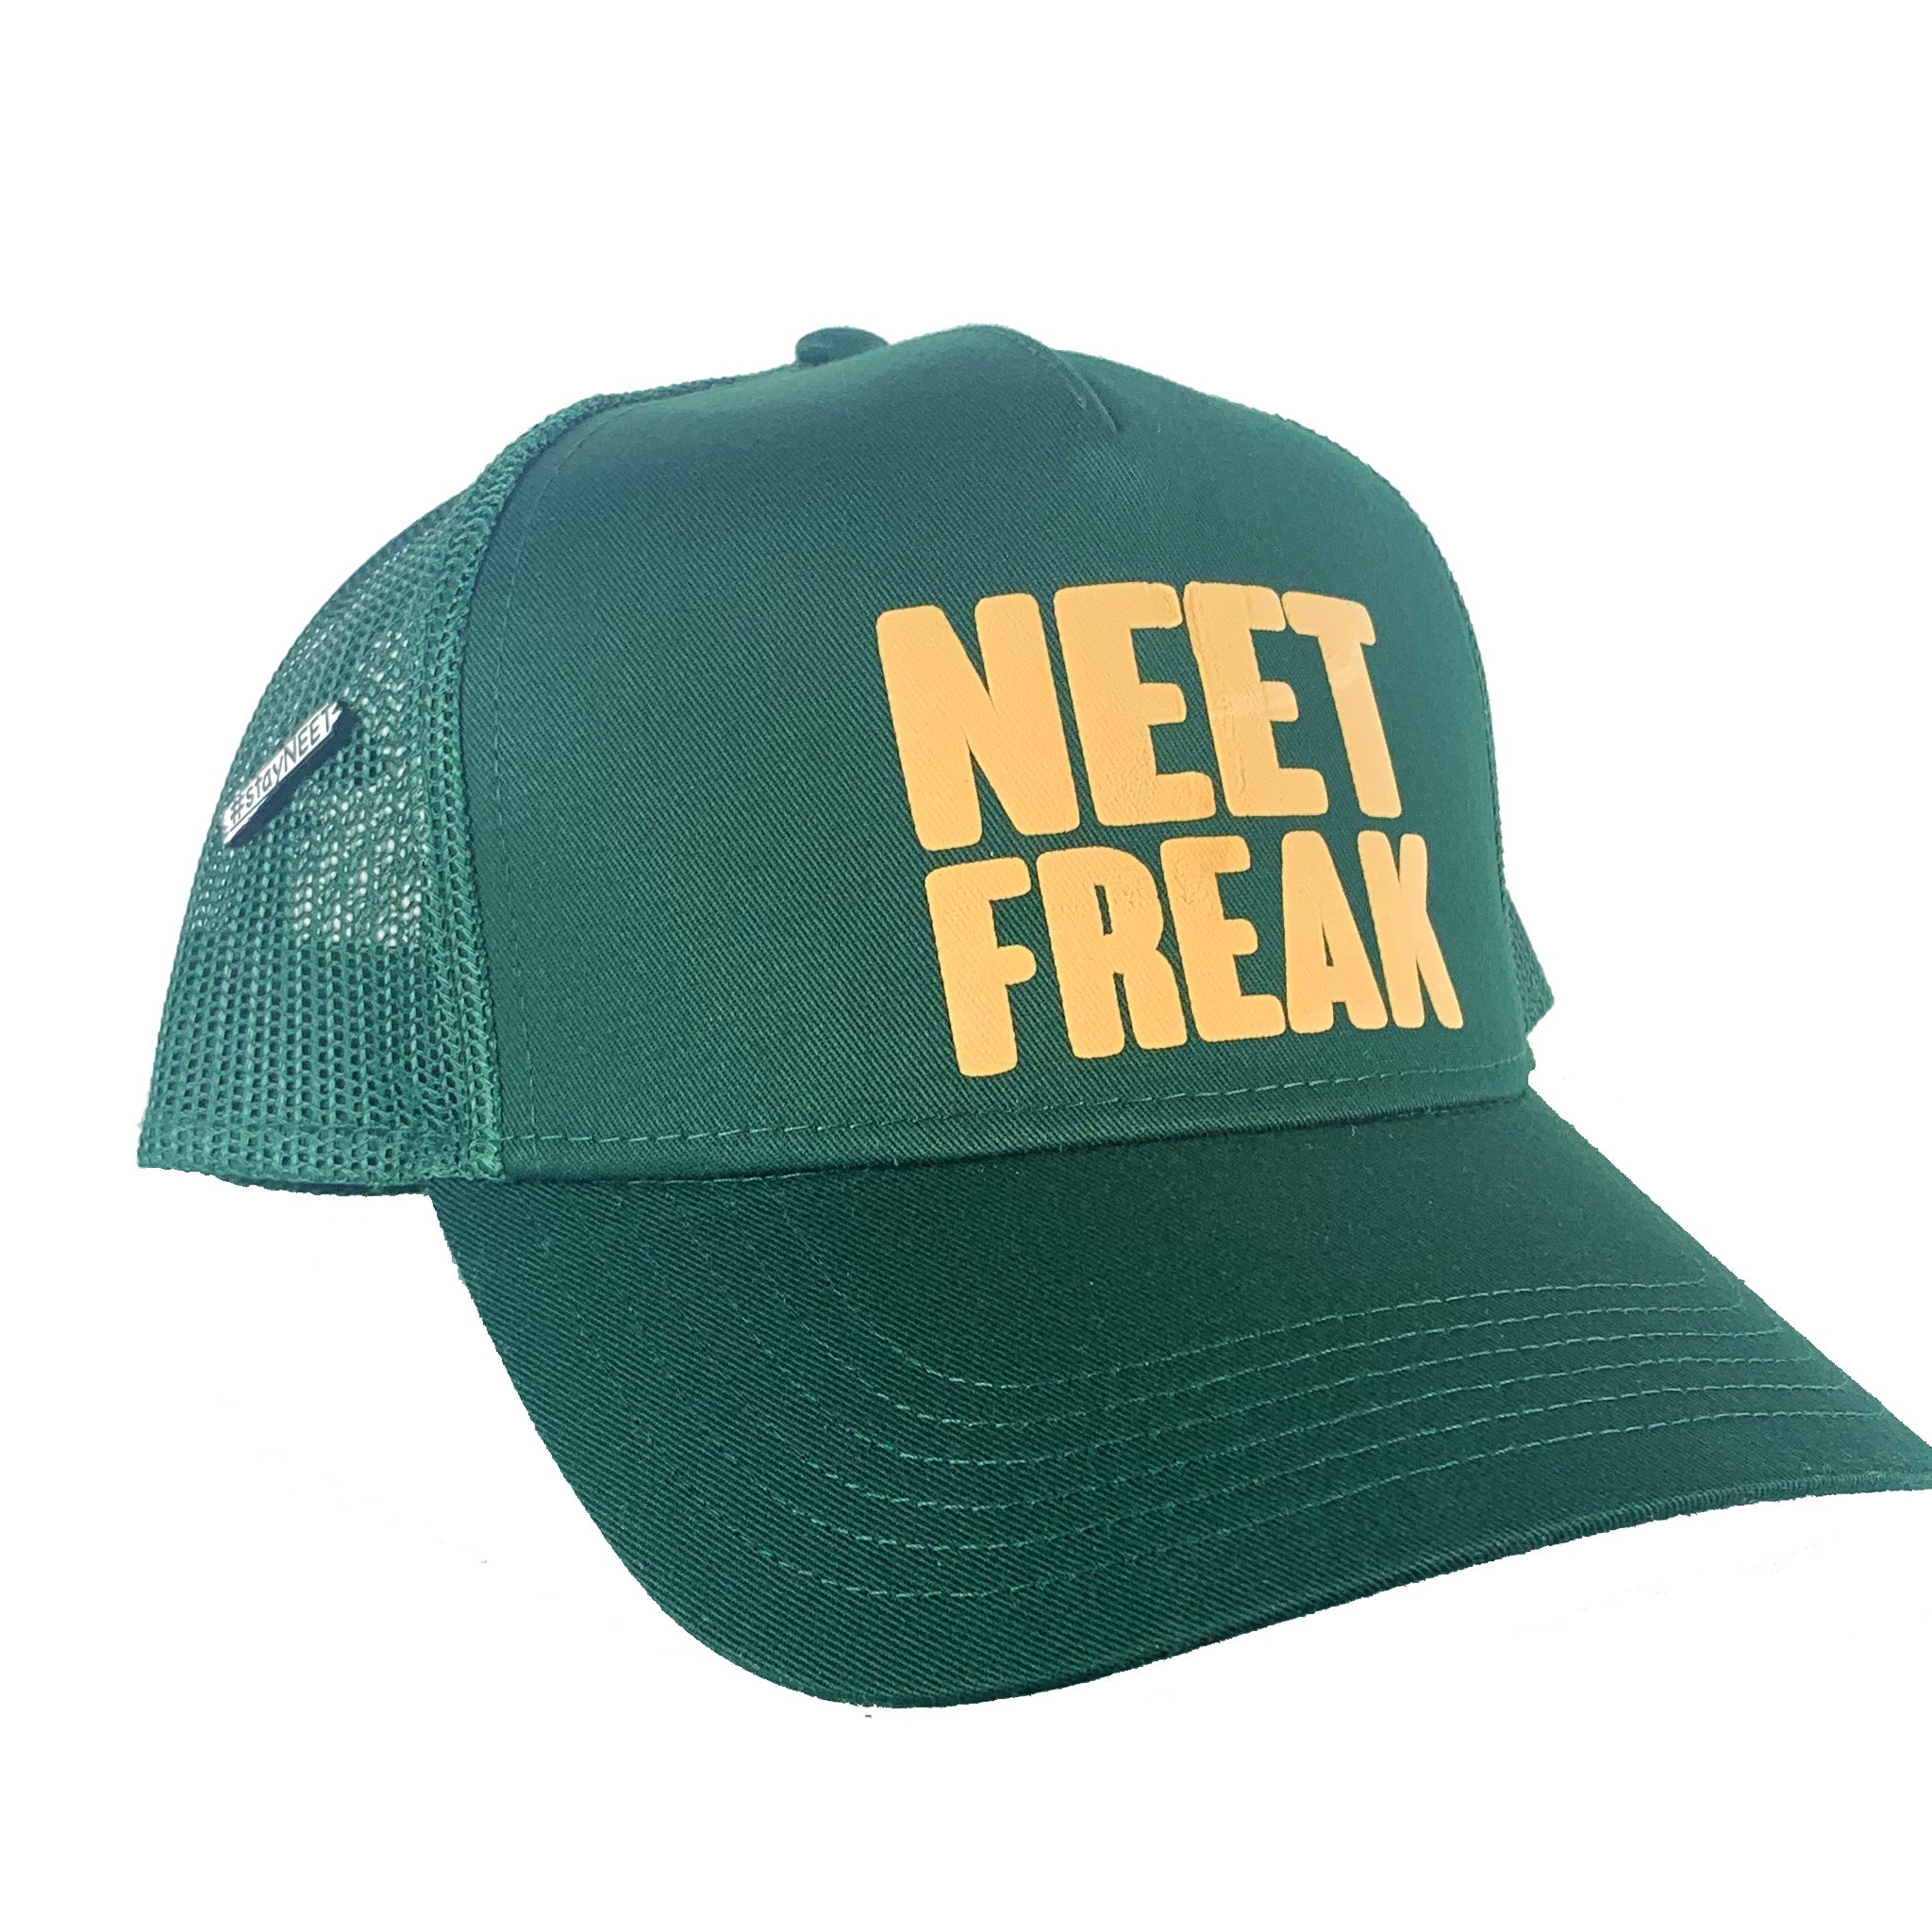 Dark Green/Tan mesh trucker hat. 